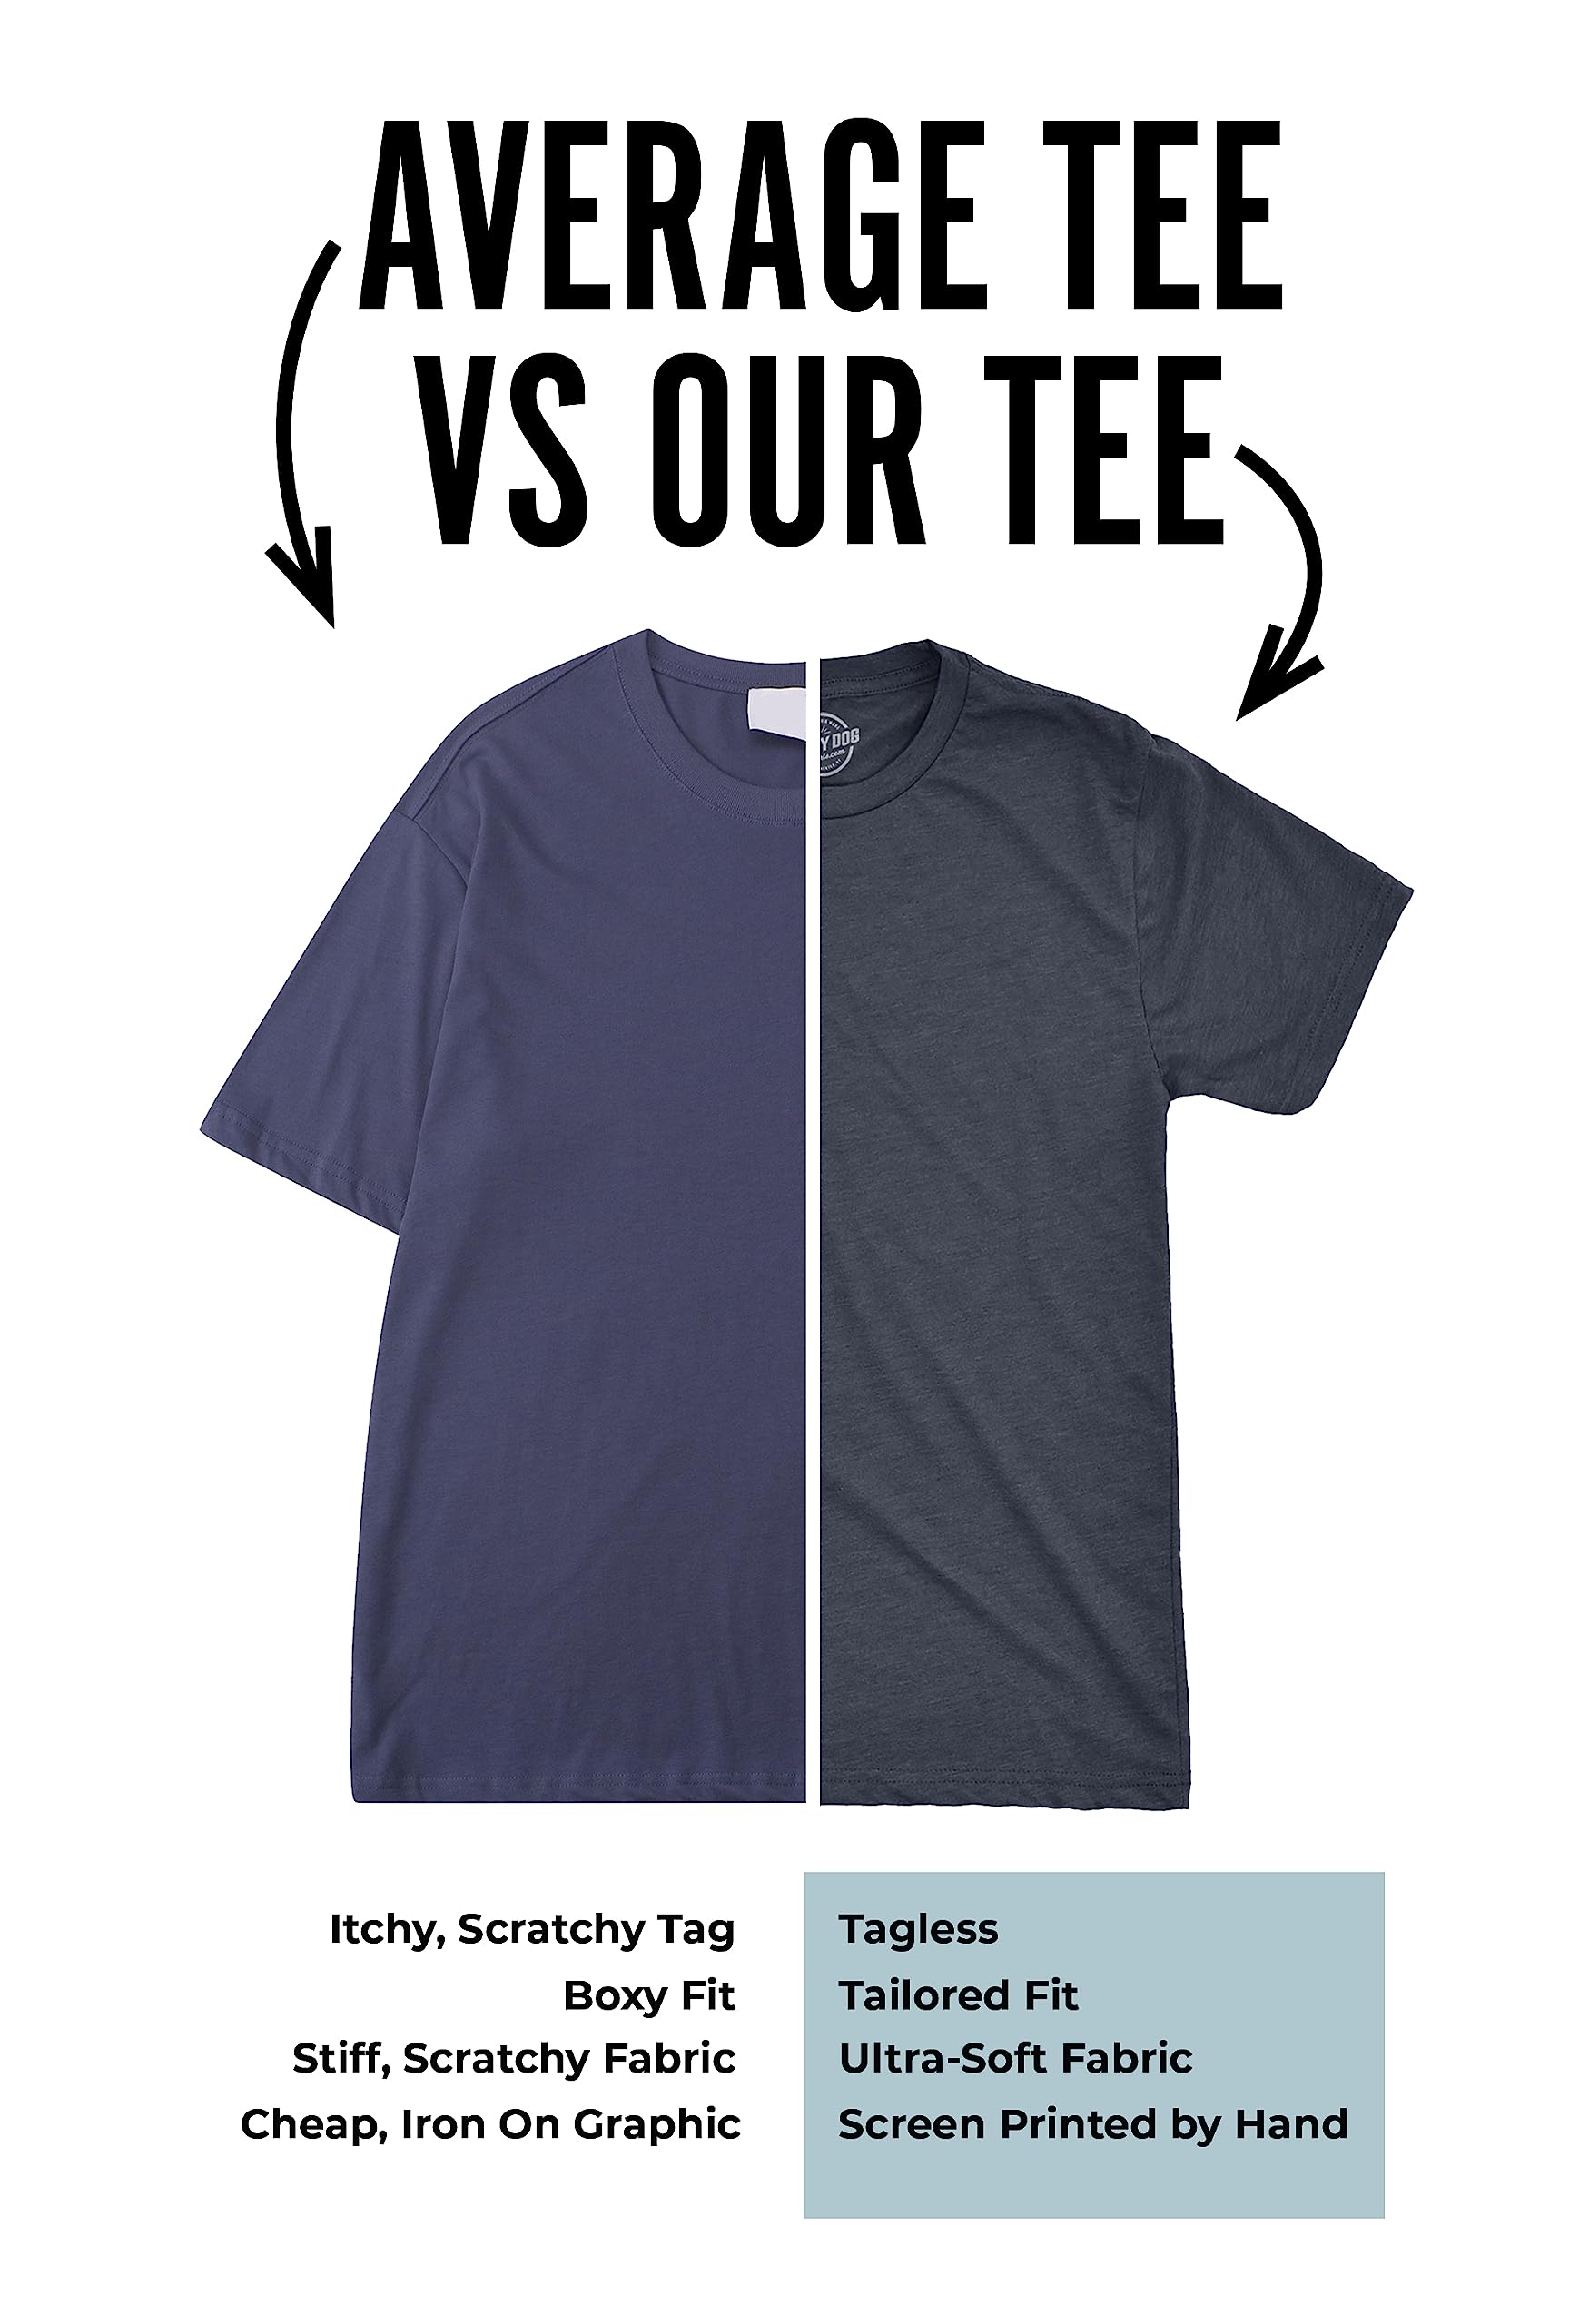 Riot T Shirt Funny Shirts for Men Political Novelty Sarcastic Adult Tees Humor